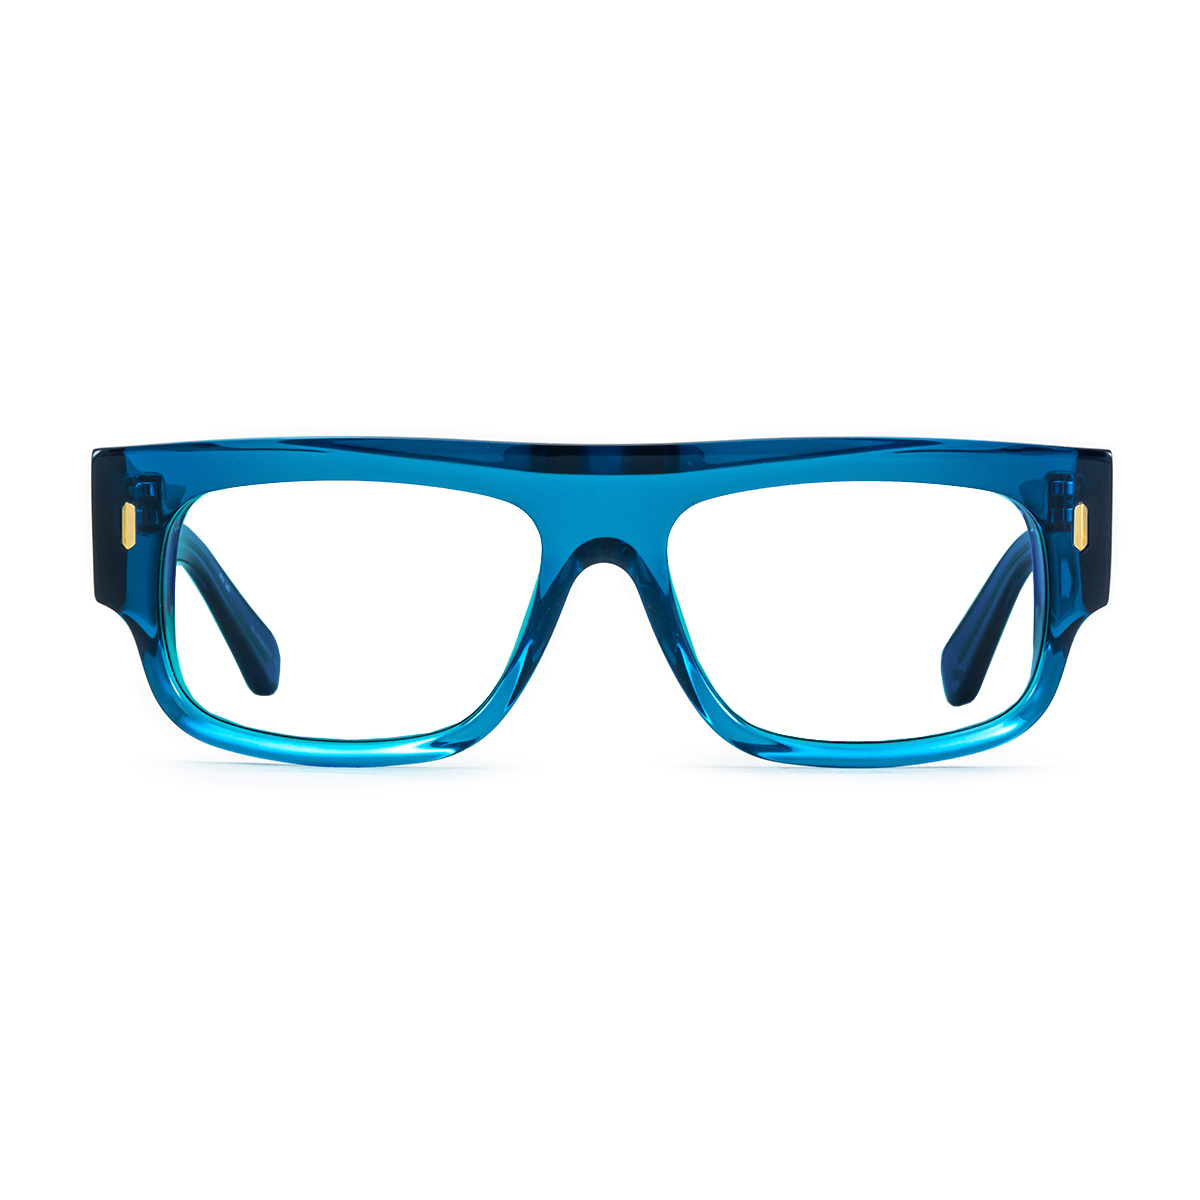 Glasgow Eco Briller - Translucent Blue